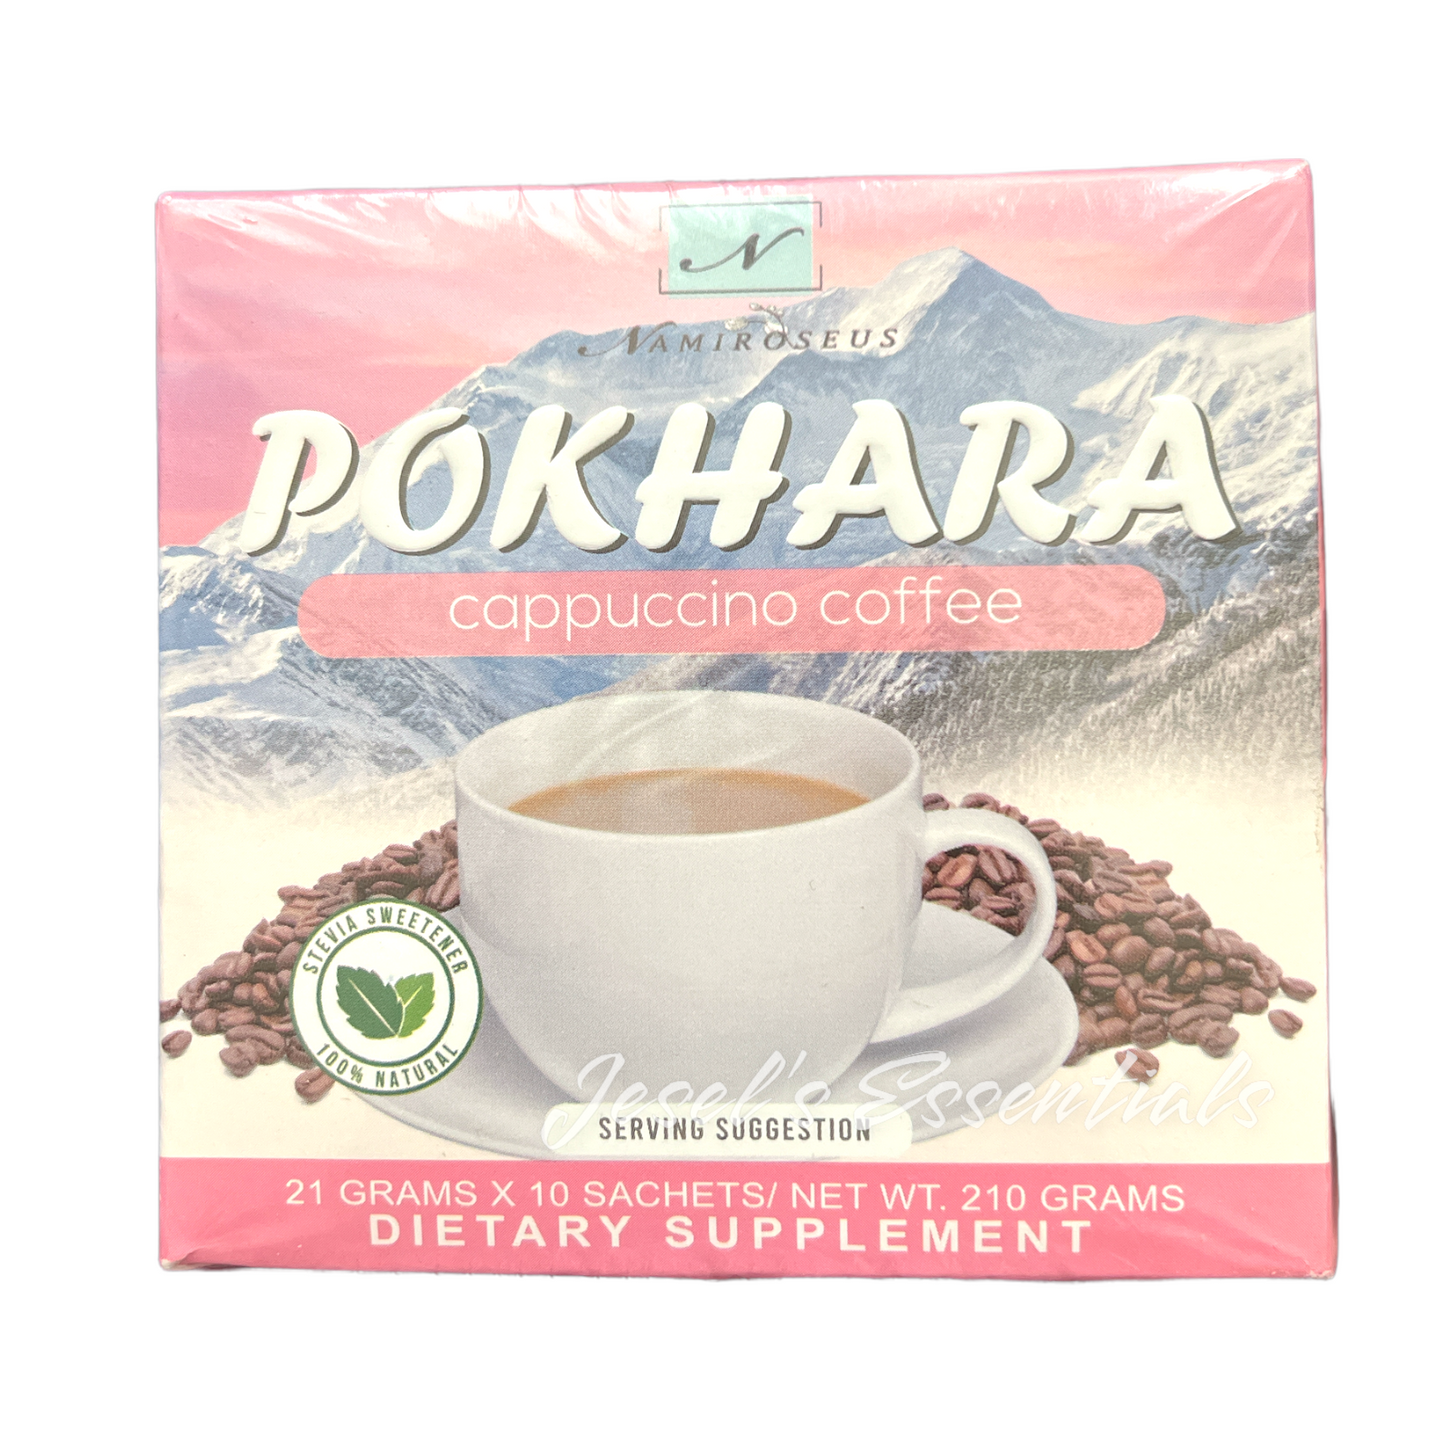 Namiroseous Pokhara Cappuccino Coffee